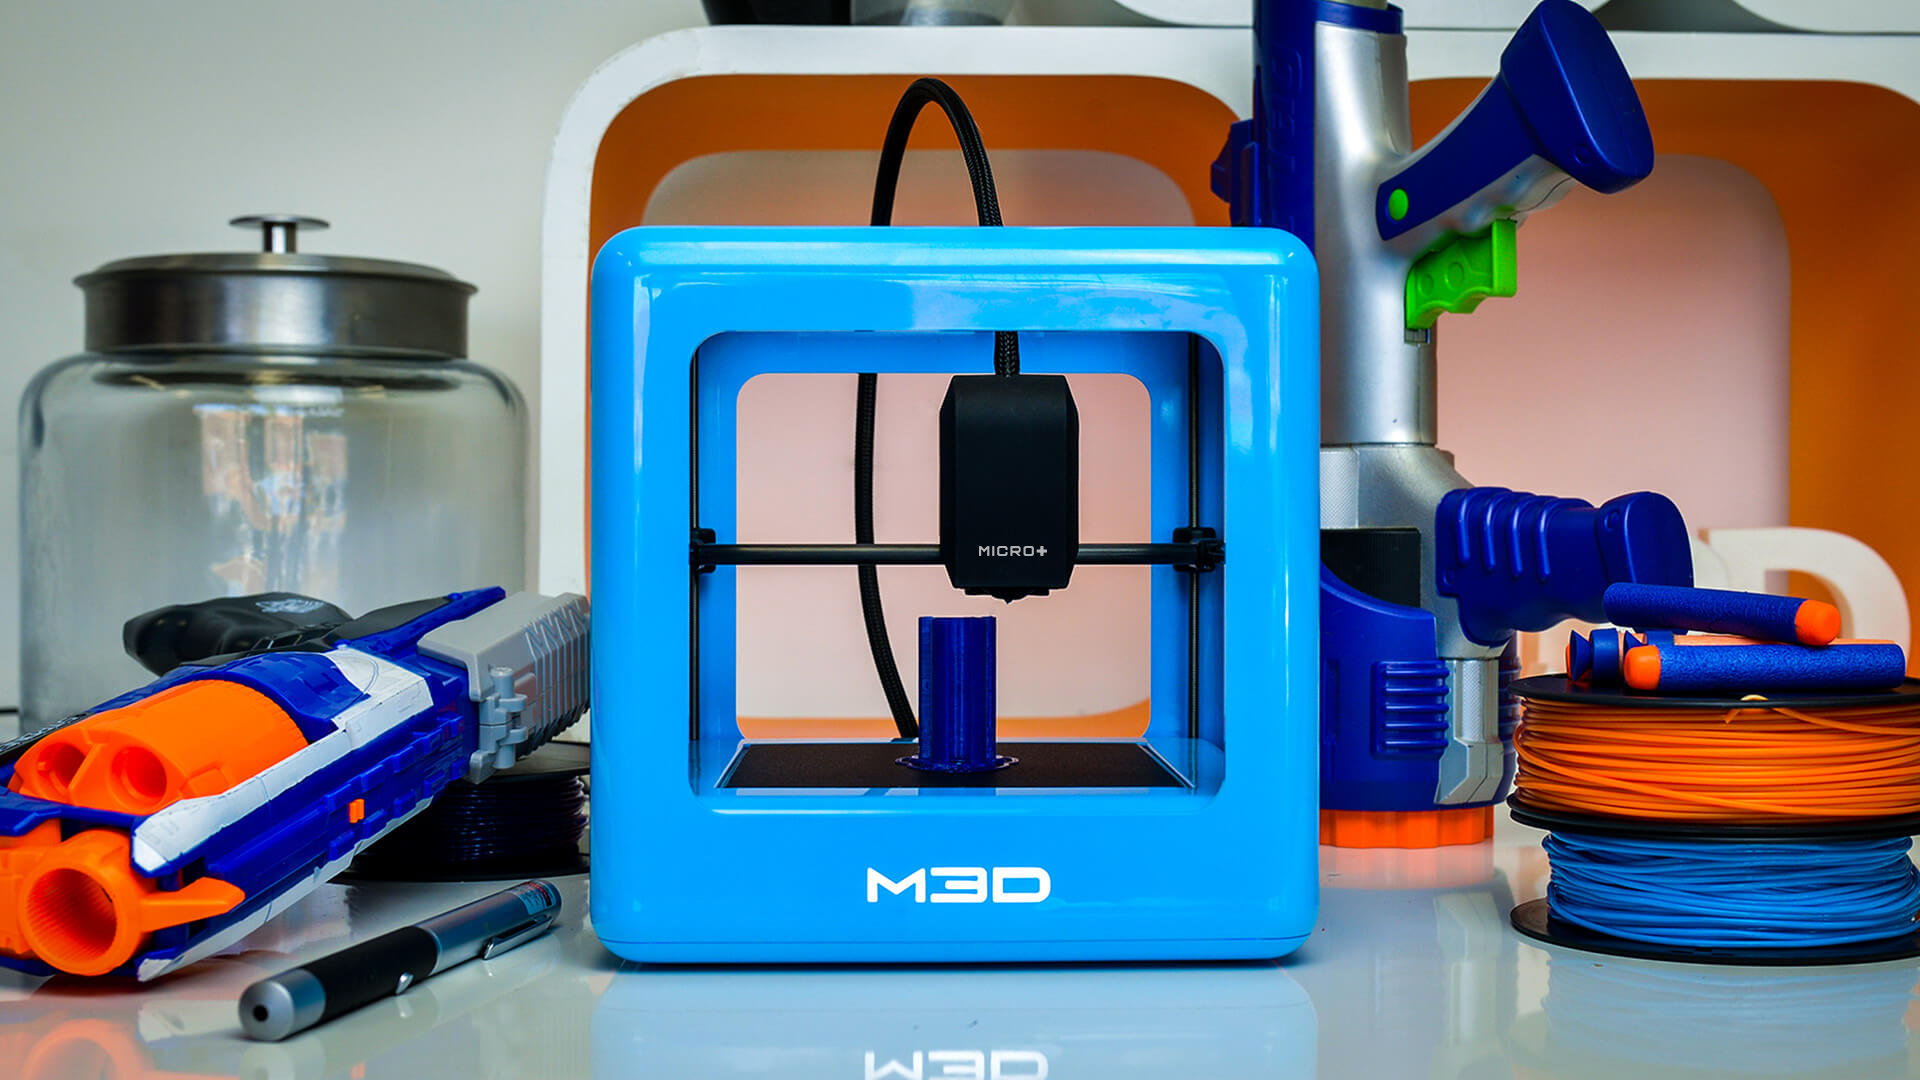 M3D Micro+ 3D Printer Description - 3D Printers Depot